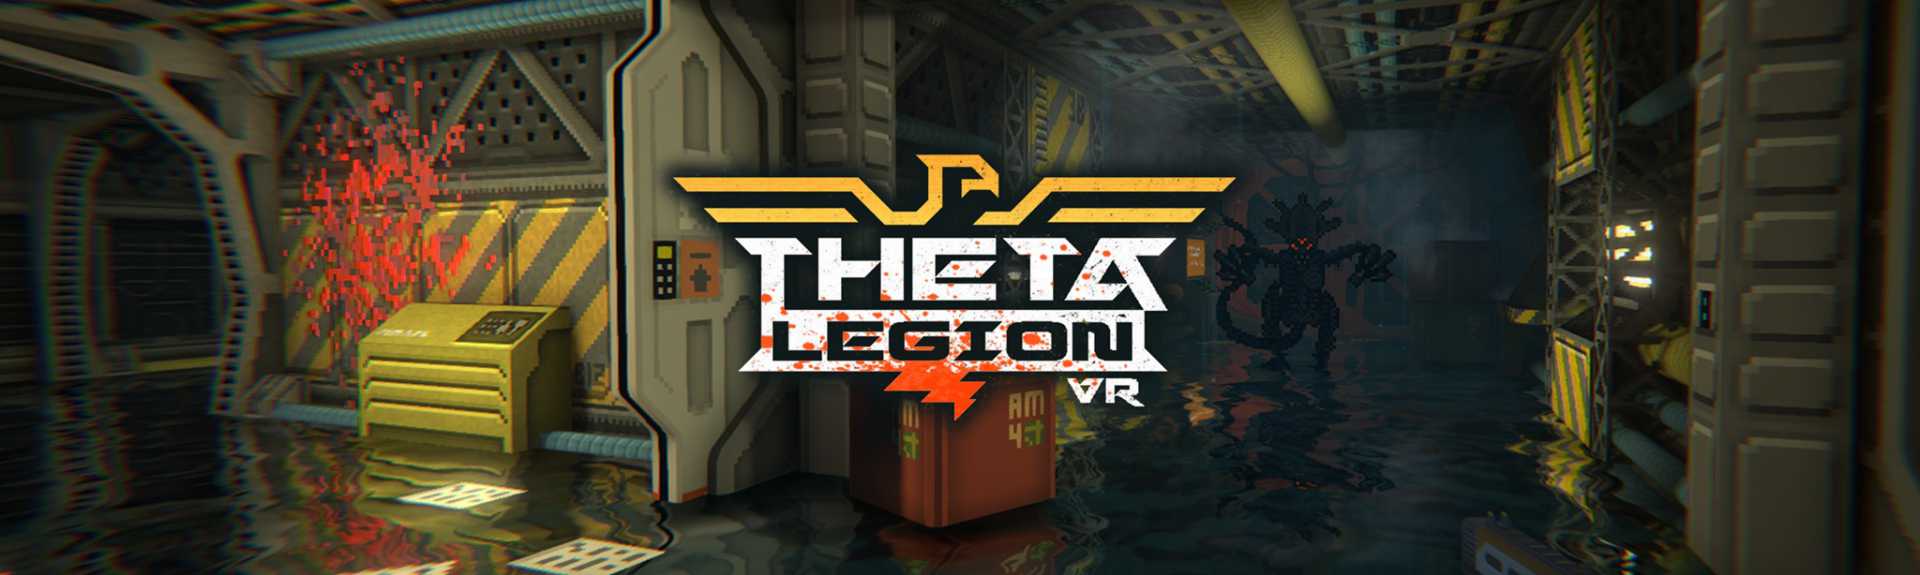 Theta Legion VR